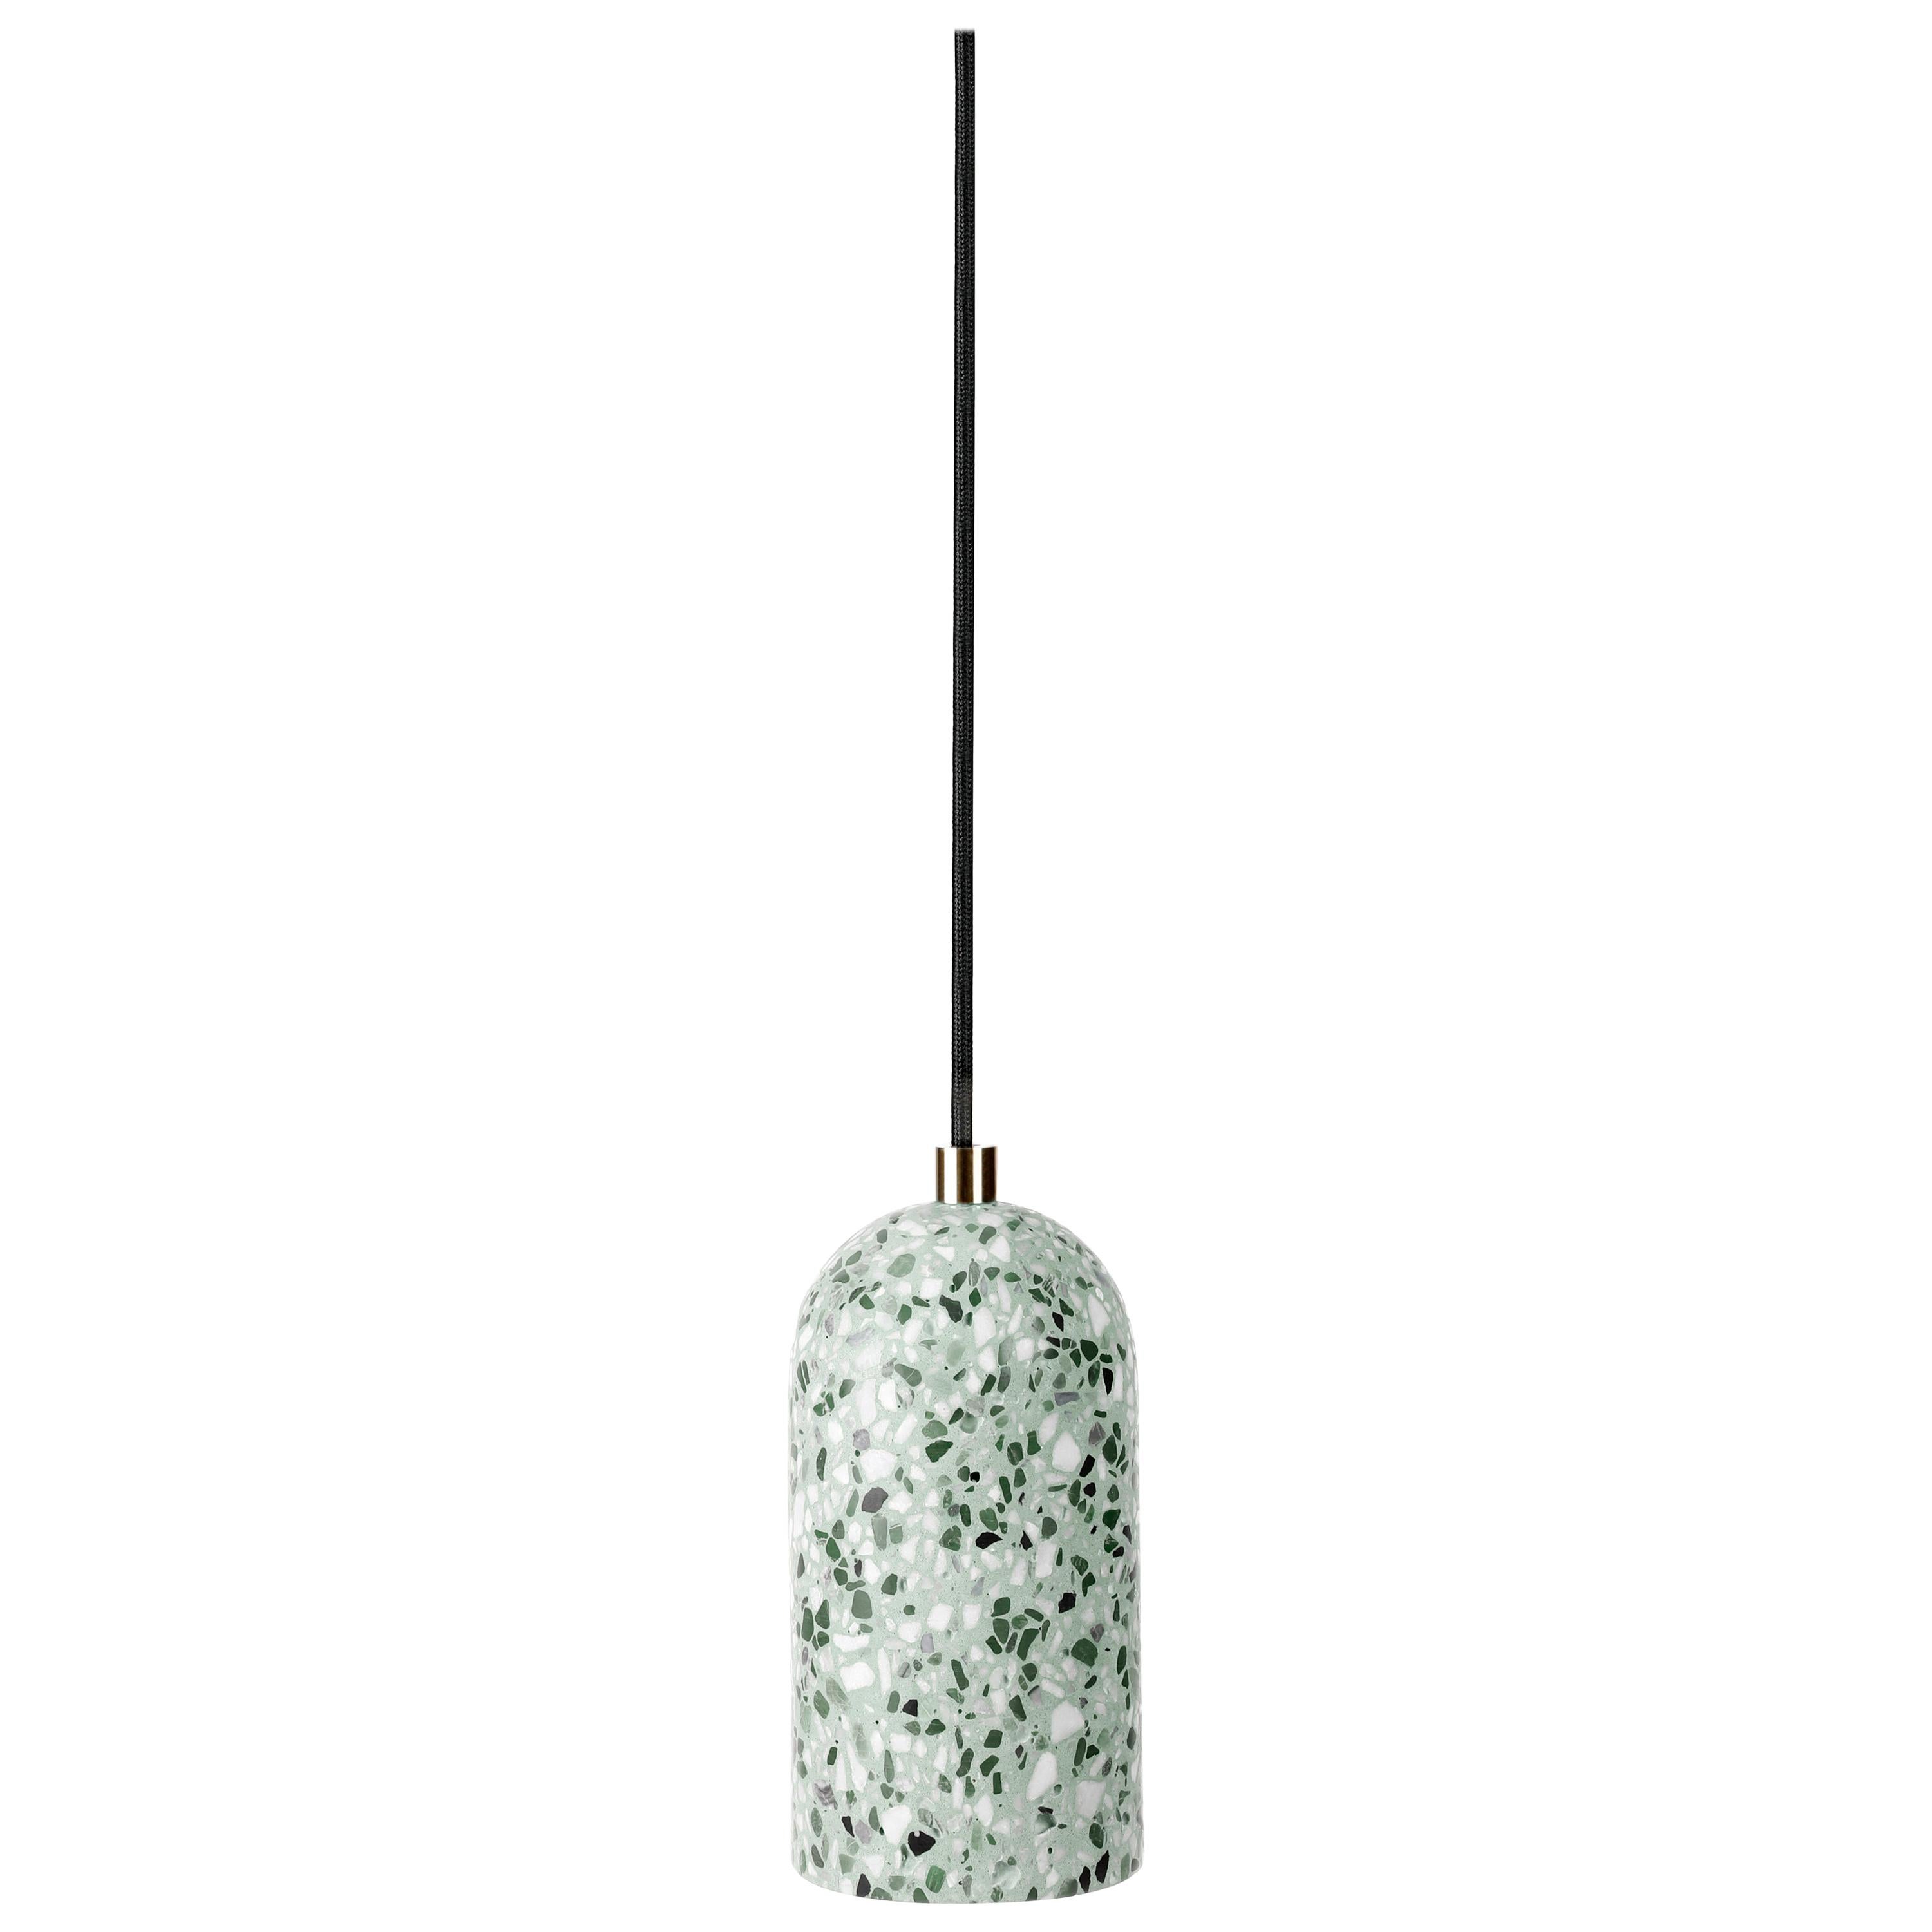 'U' Mint Green Terrazzo Pendant Lamp by Bentu Design For Sale